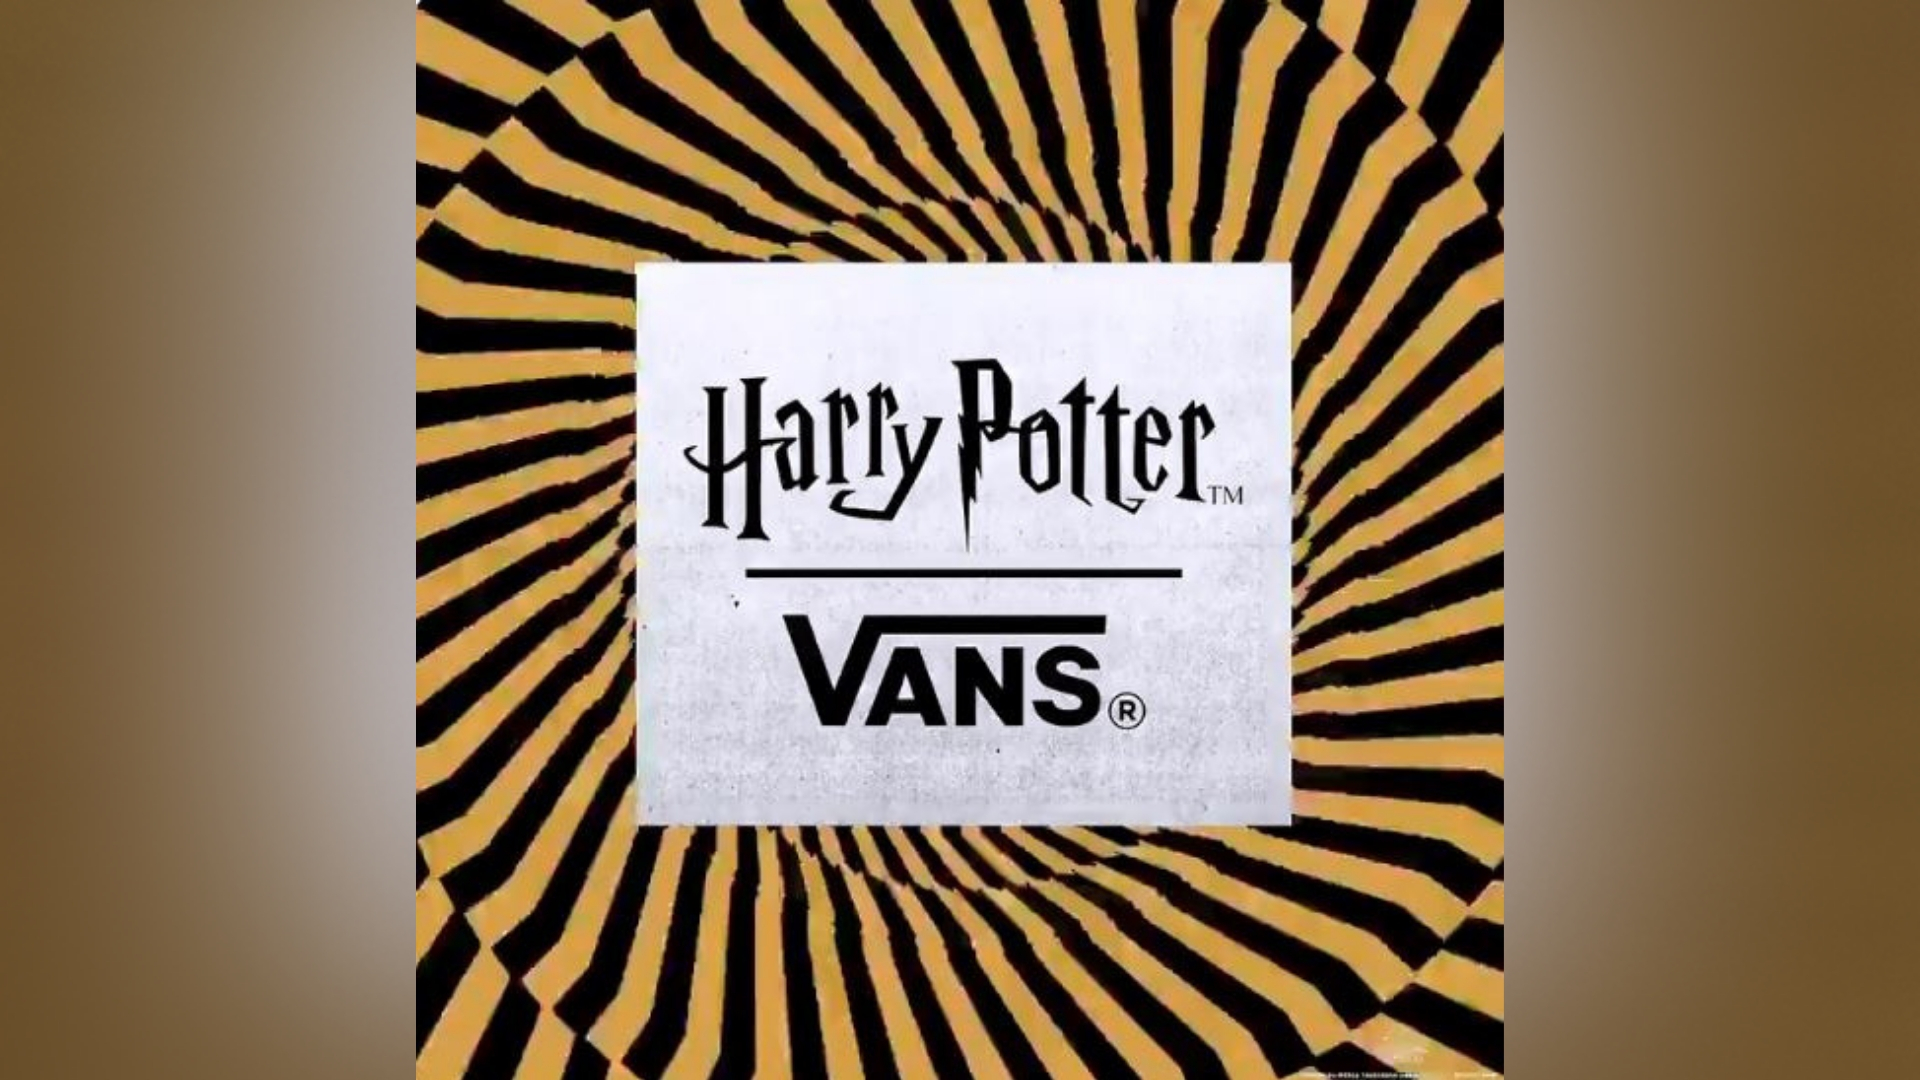 Vans announces Harry Potter themed collection